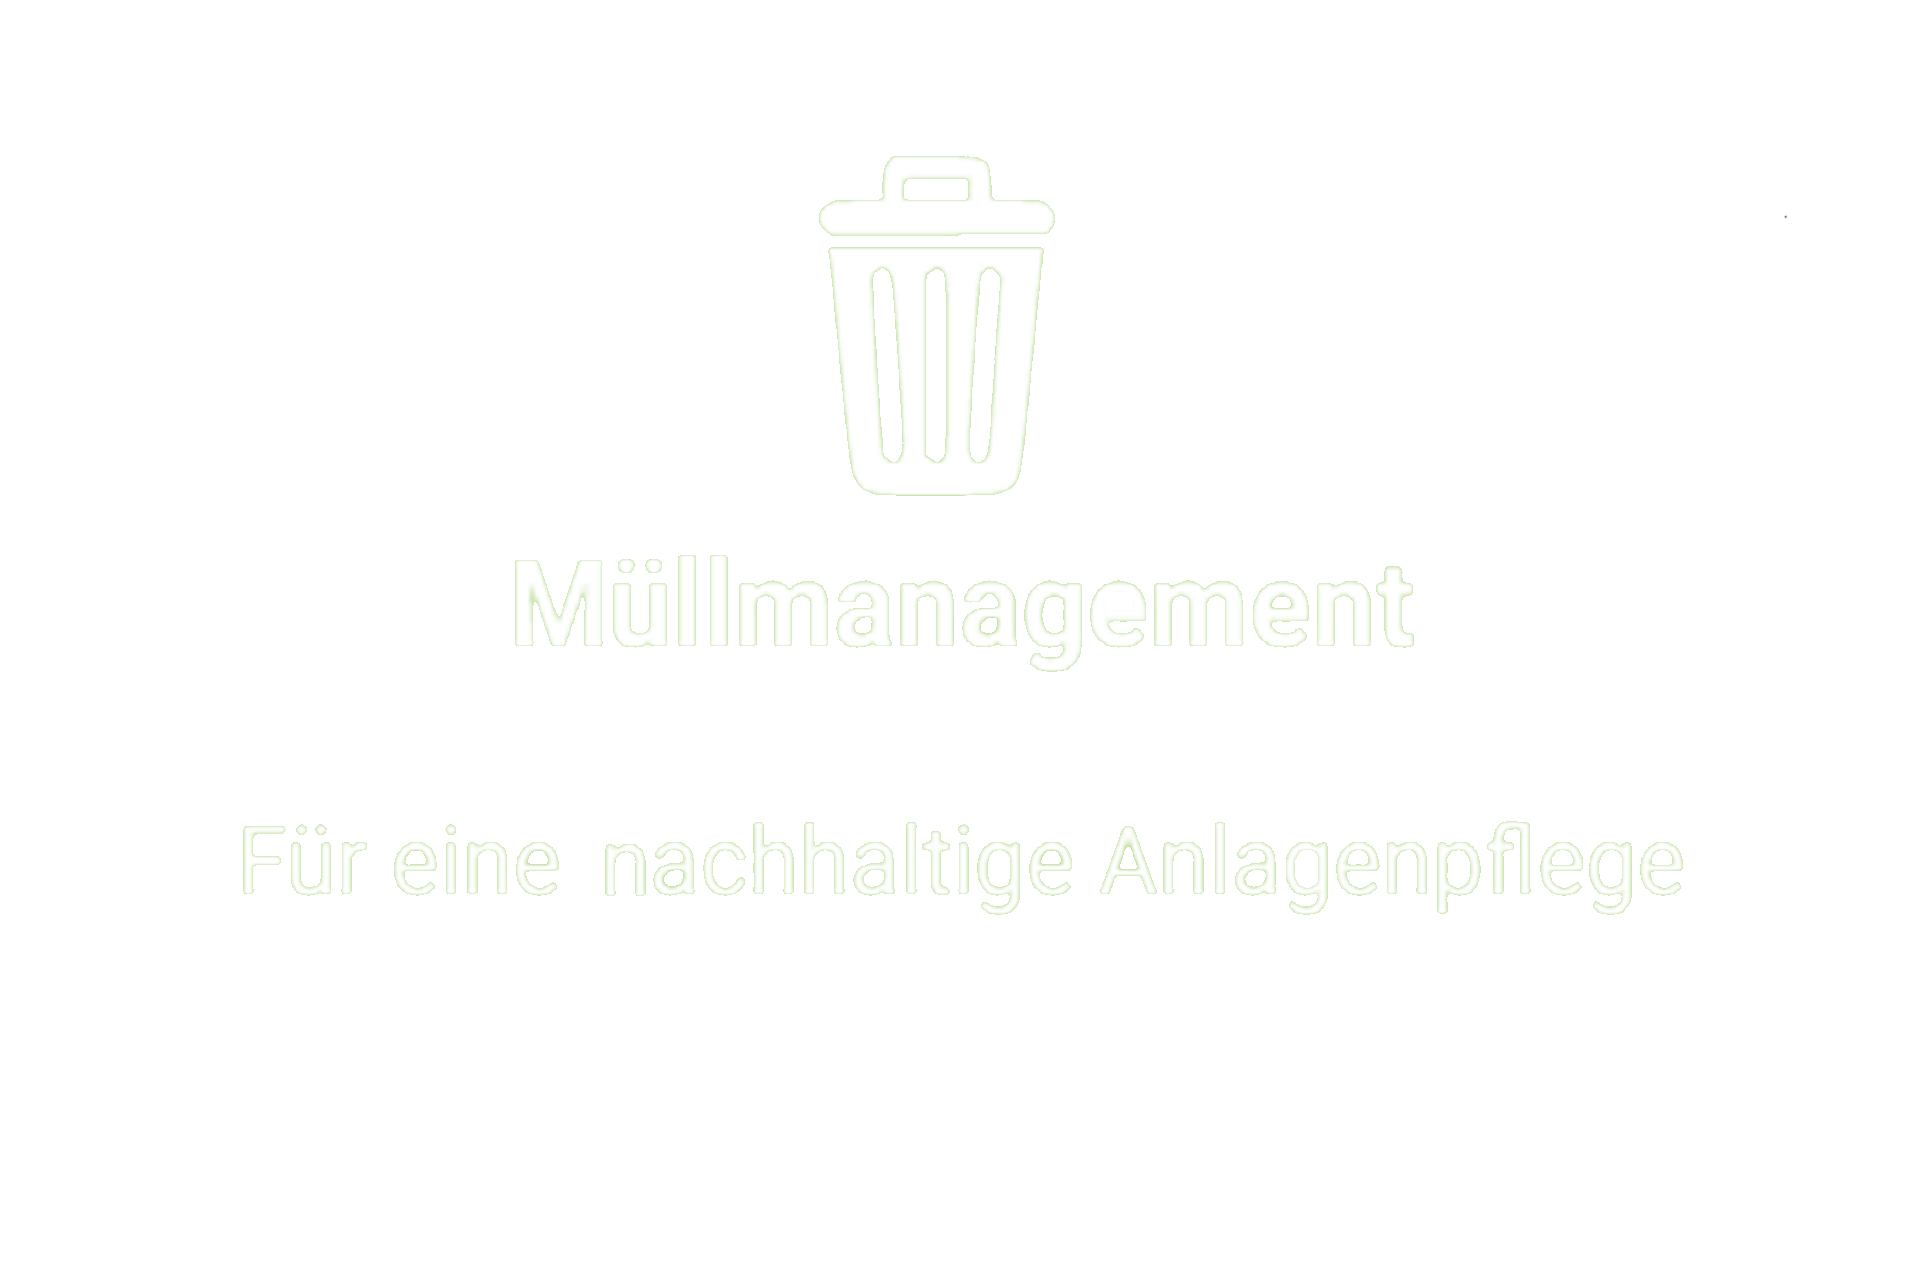 Müllmanagement Rotation - Gartenbau Lörrach, Waldshut